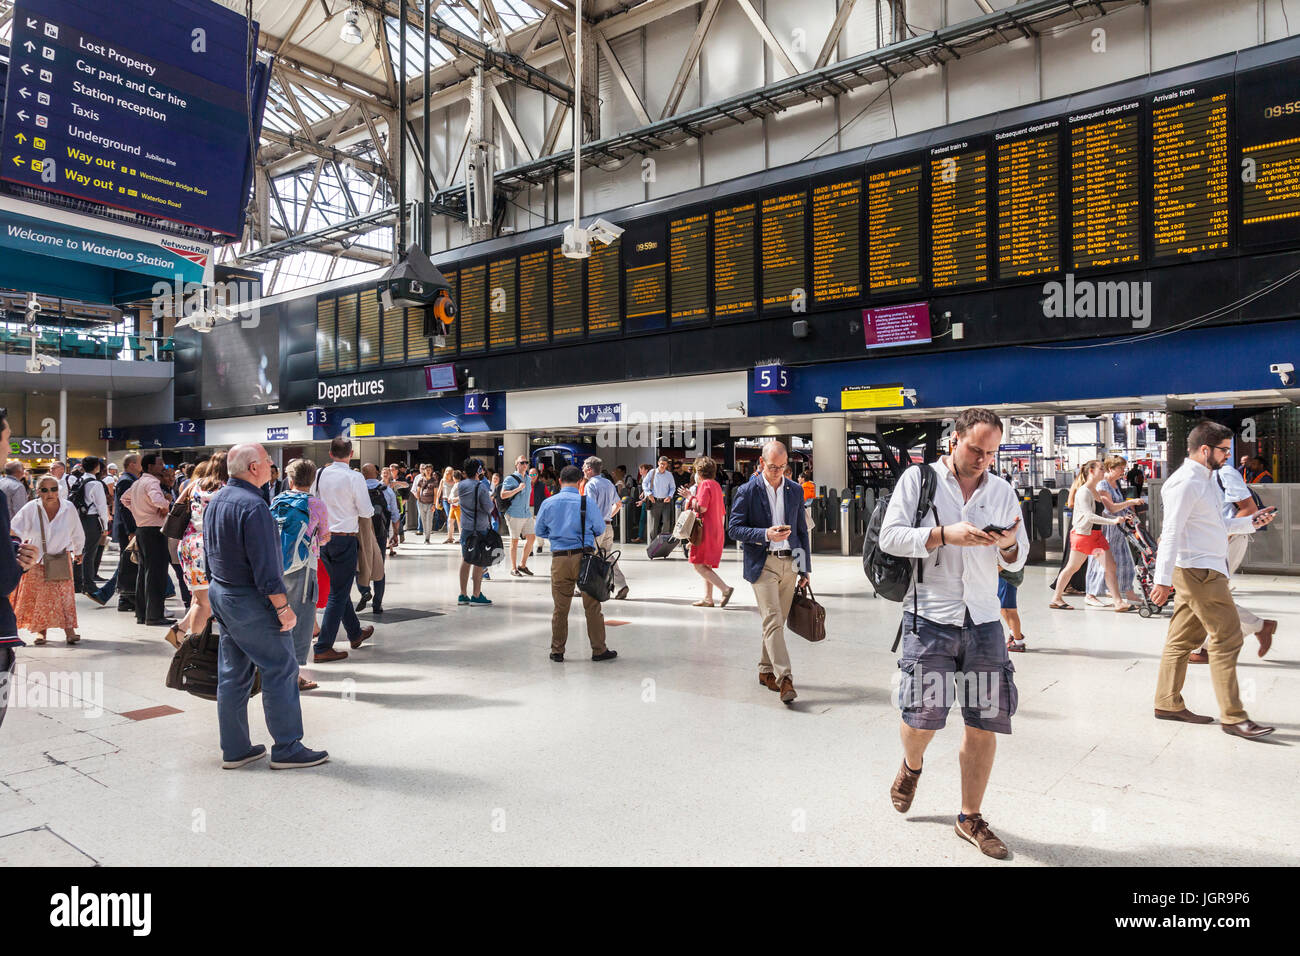 Passeggeri, piazzale di arrivi e partenze e scheda segnaletica direzionale in stazione di Waterloo, una grande stazione terminale a Lambeth, Londra centrale. Foto Stock